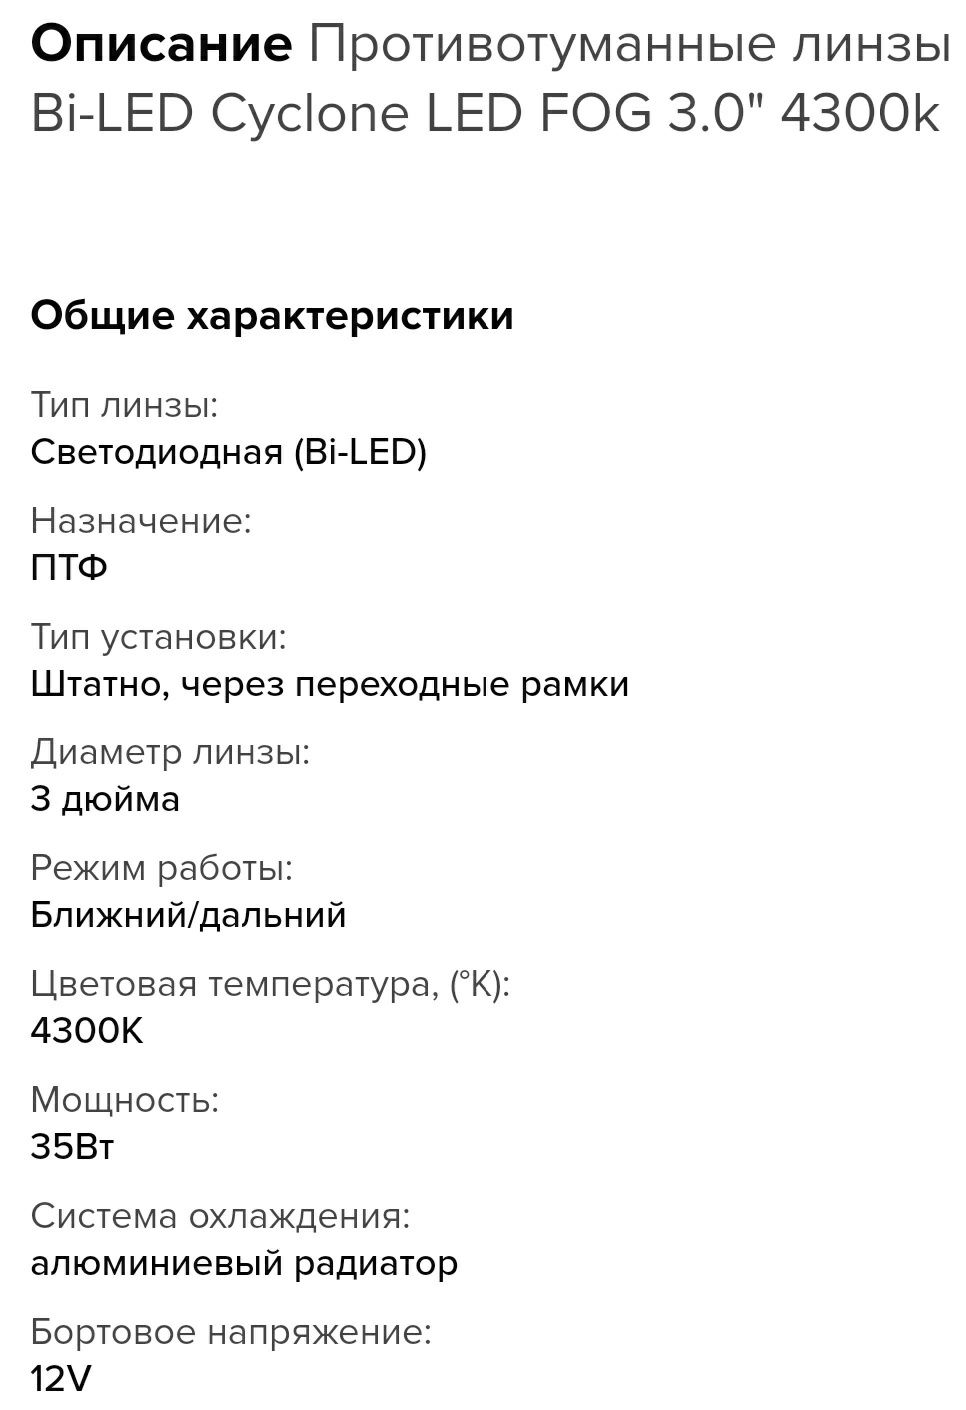 Противотуманные линзы Bi-LED Cyclone LED FOG 3.0" 4300k